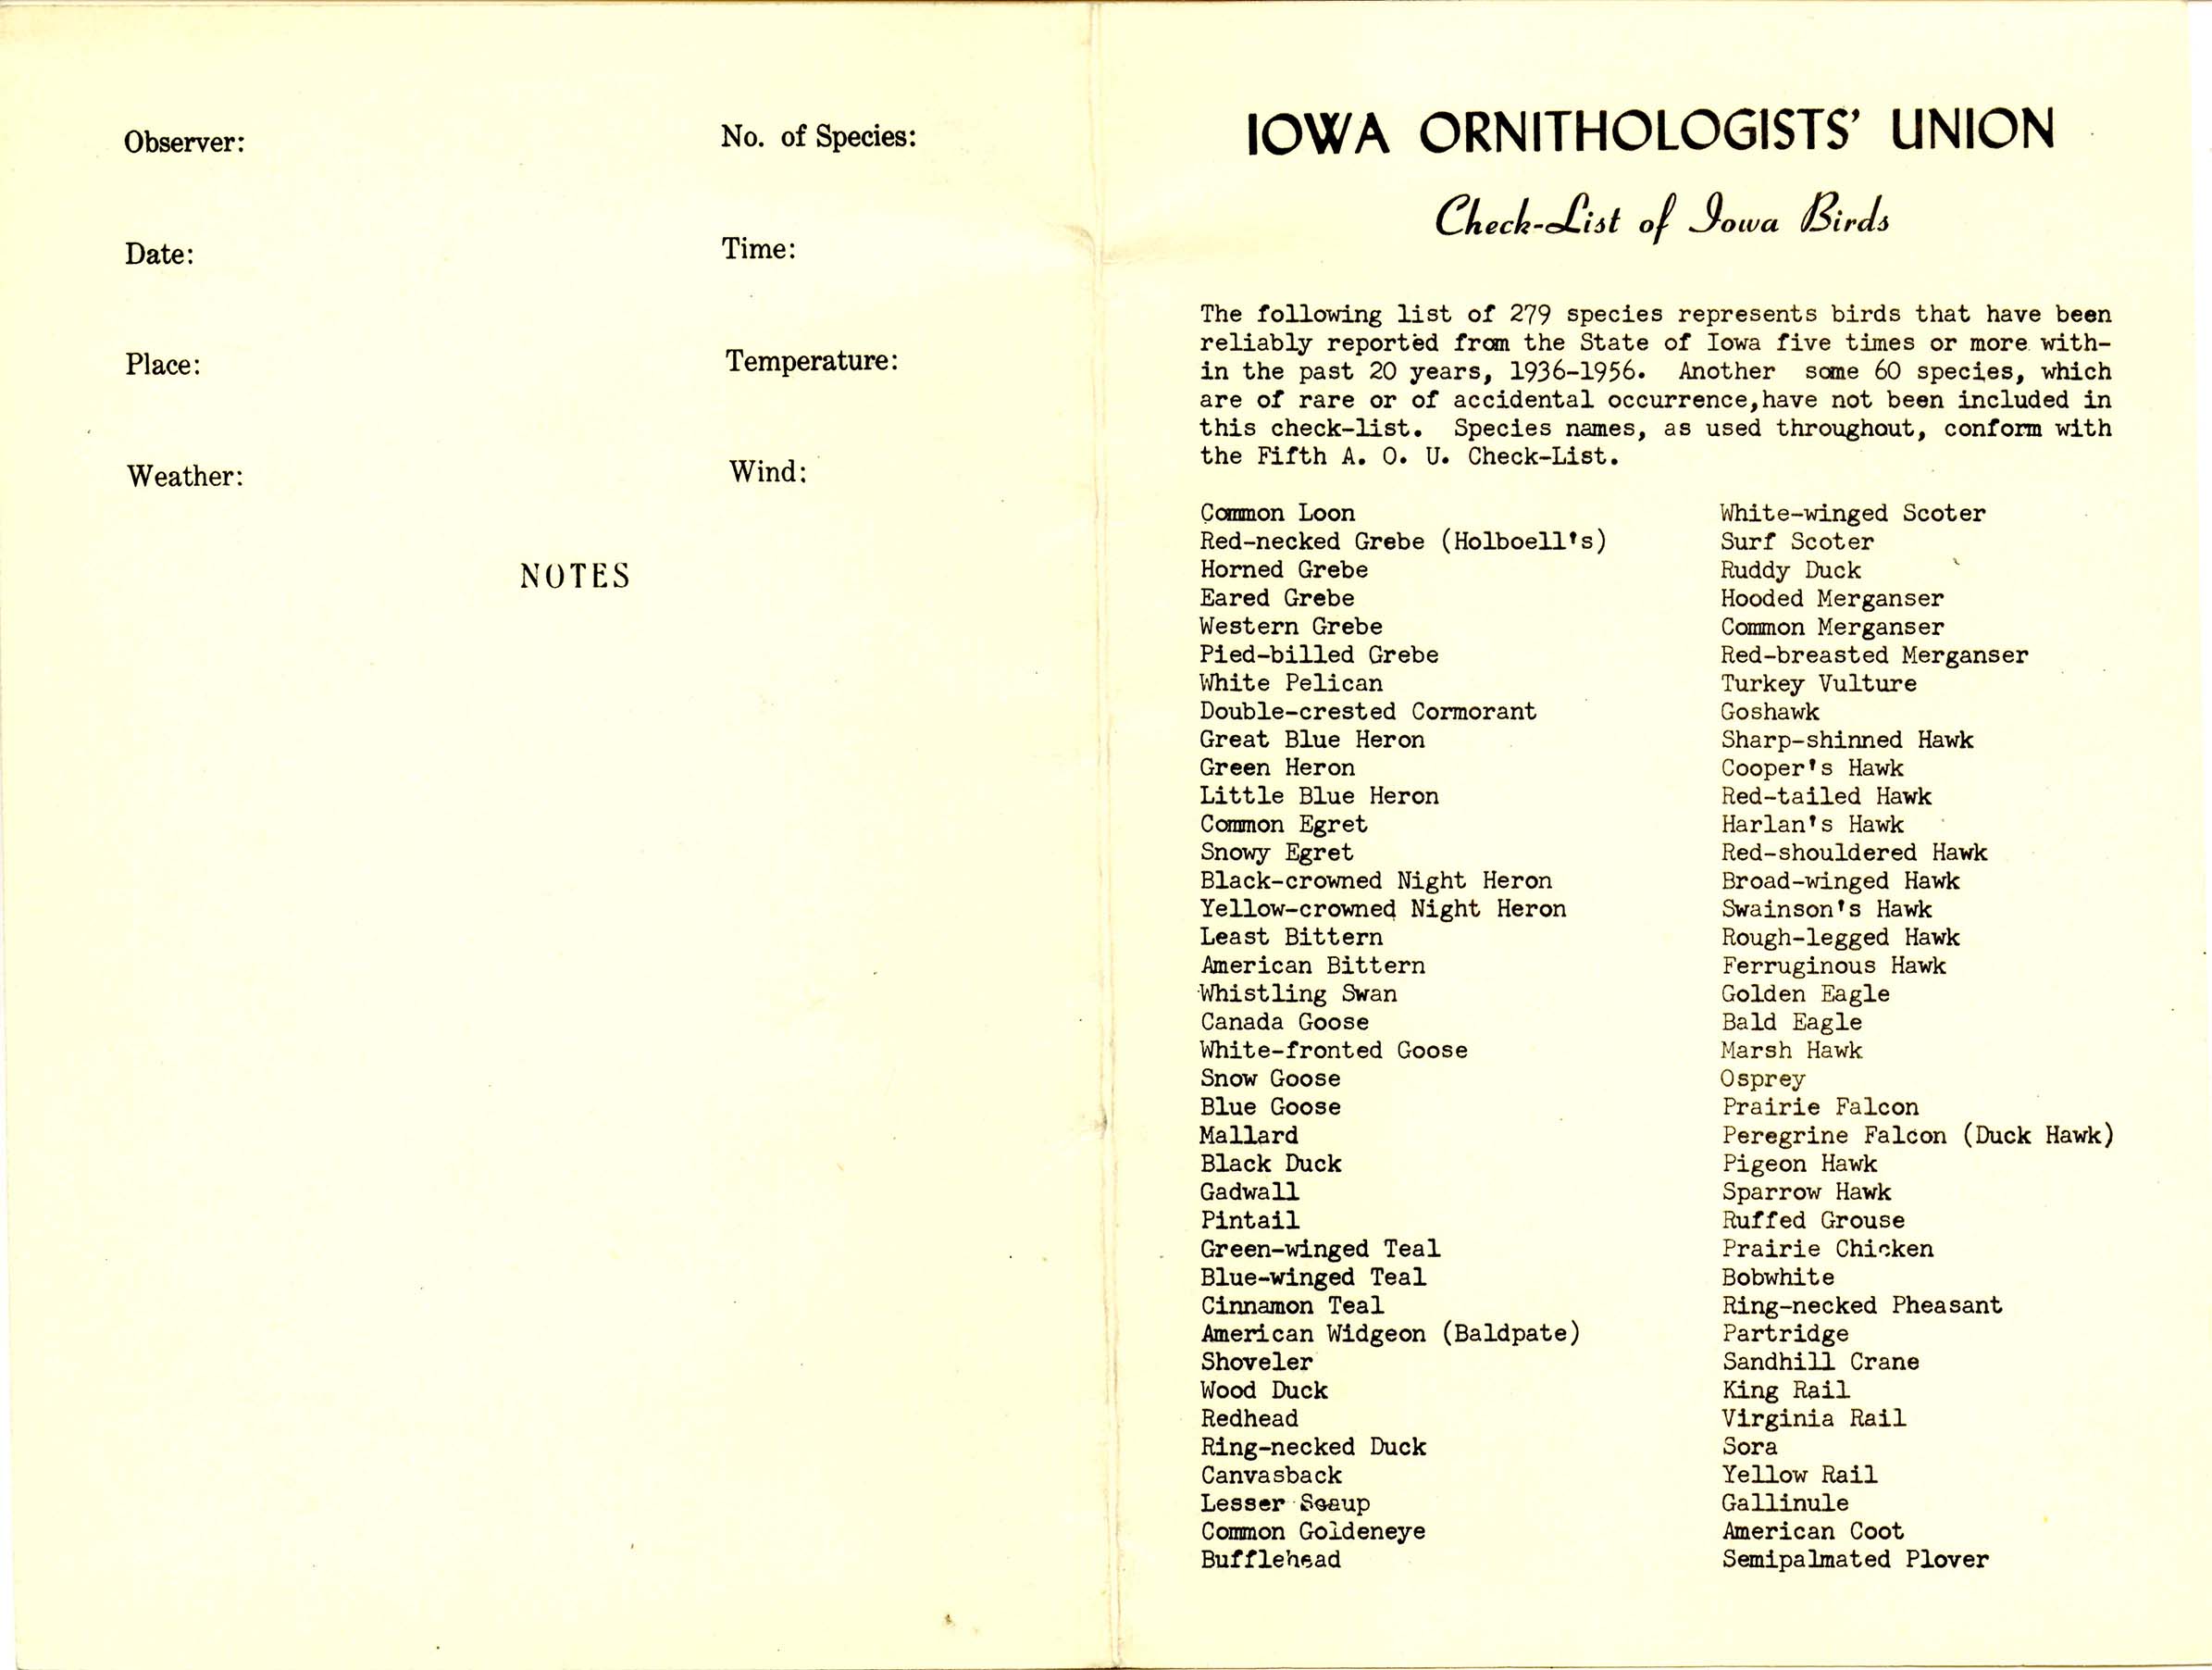 Iowa Ornithologists' Union check-list of Iowa birds